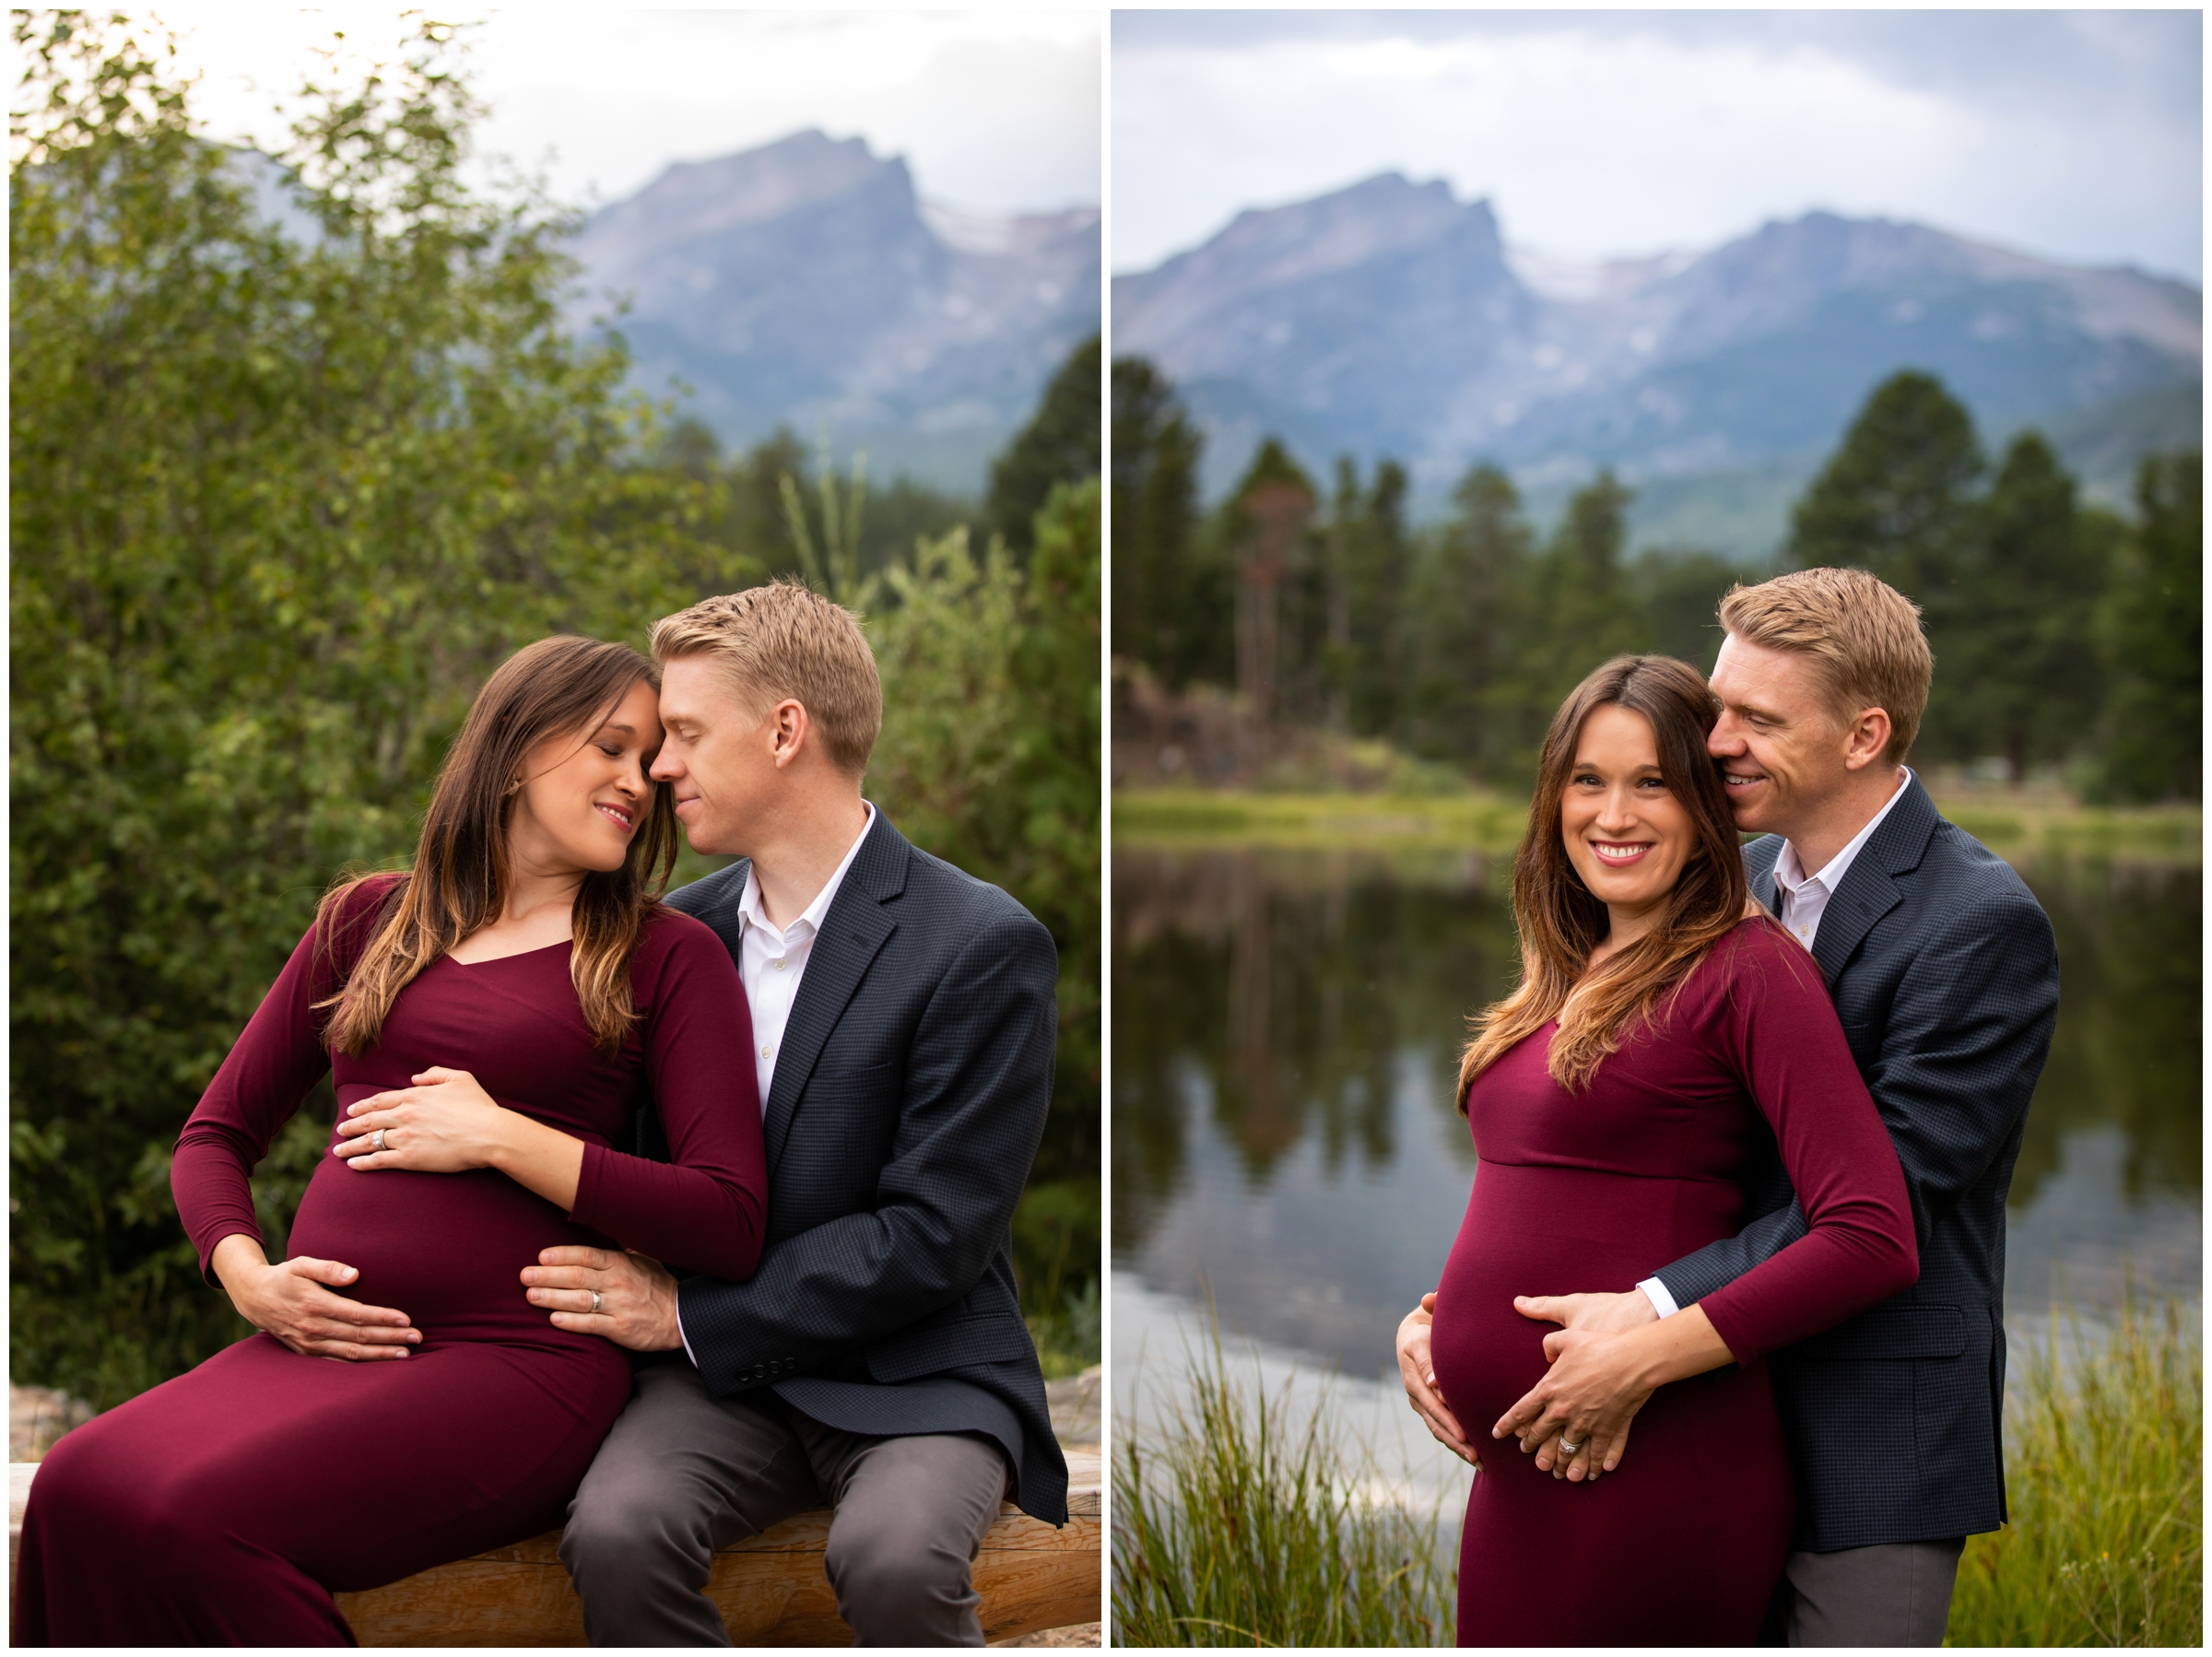 RMNP maternity portraits at Sprague Lake by best Colorado photographer Plum Pretty Photography